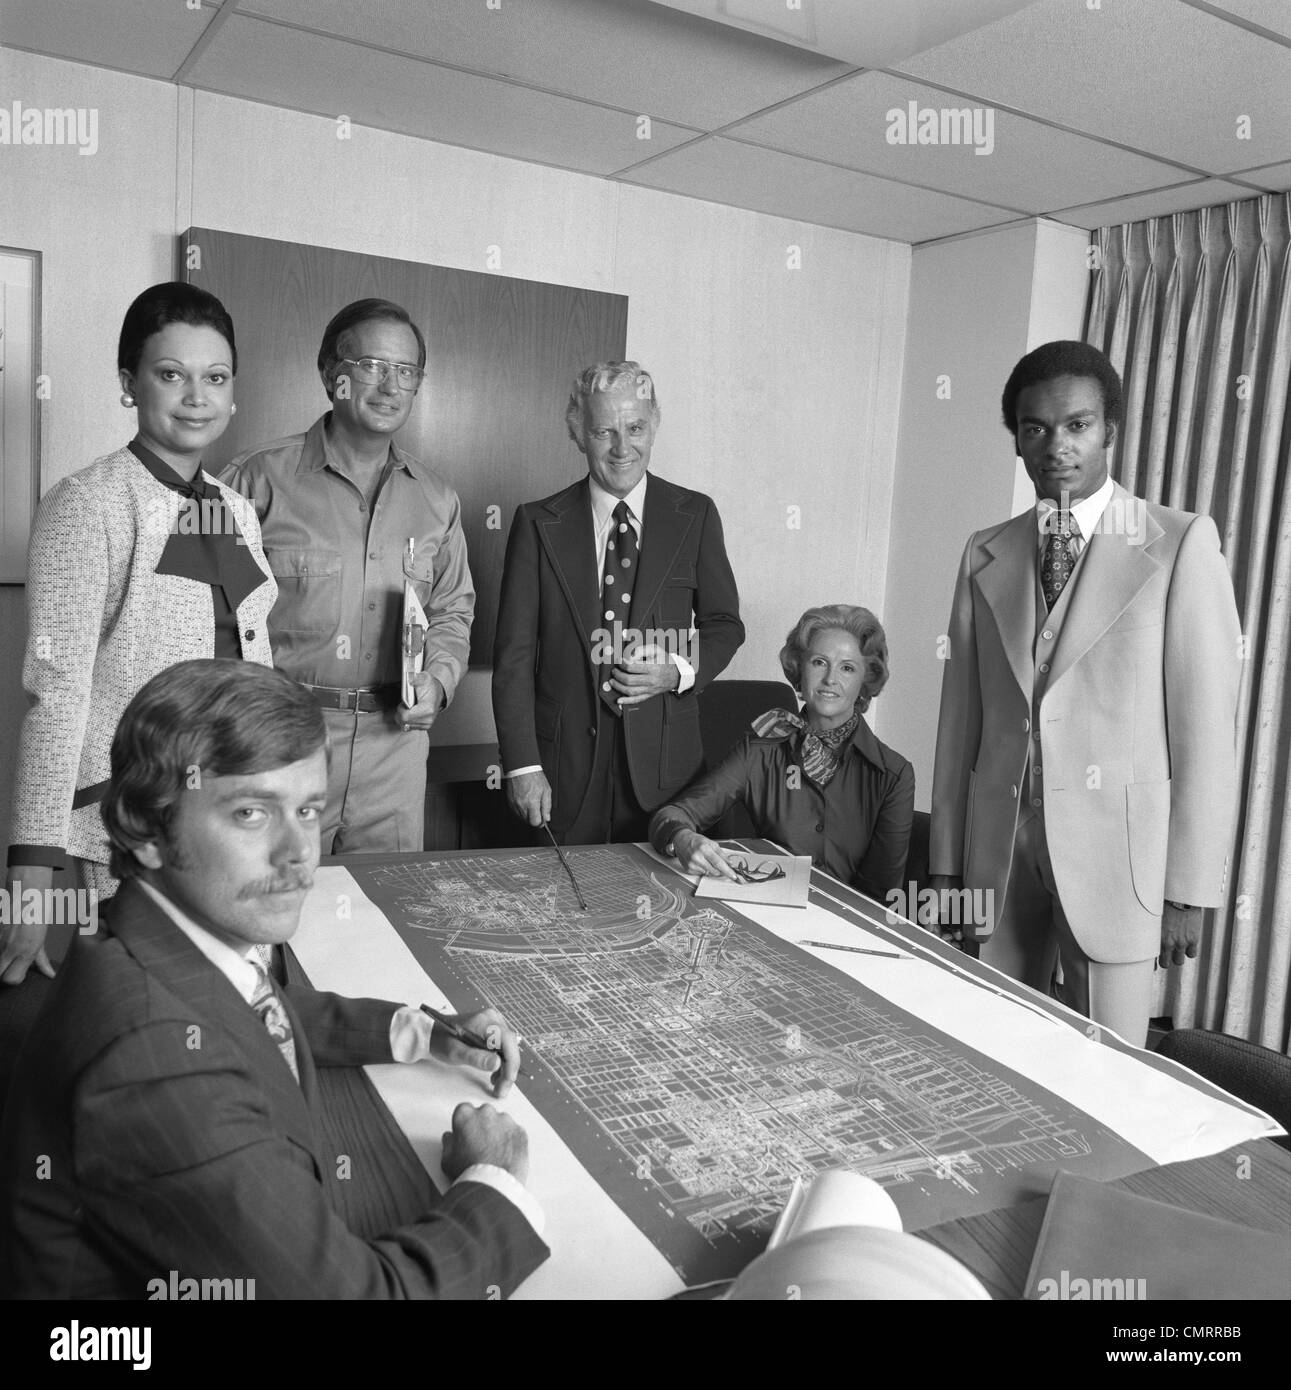 1970s PORTRAIT 6 BUSINESS PEOPLE MEN & WOMEN AROUND TABLE WITH BLUEPRINTS Stock Photo